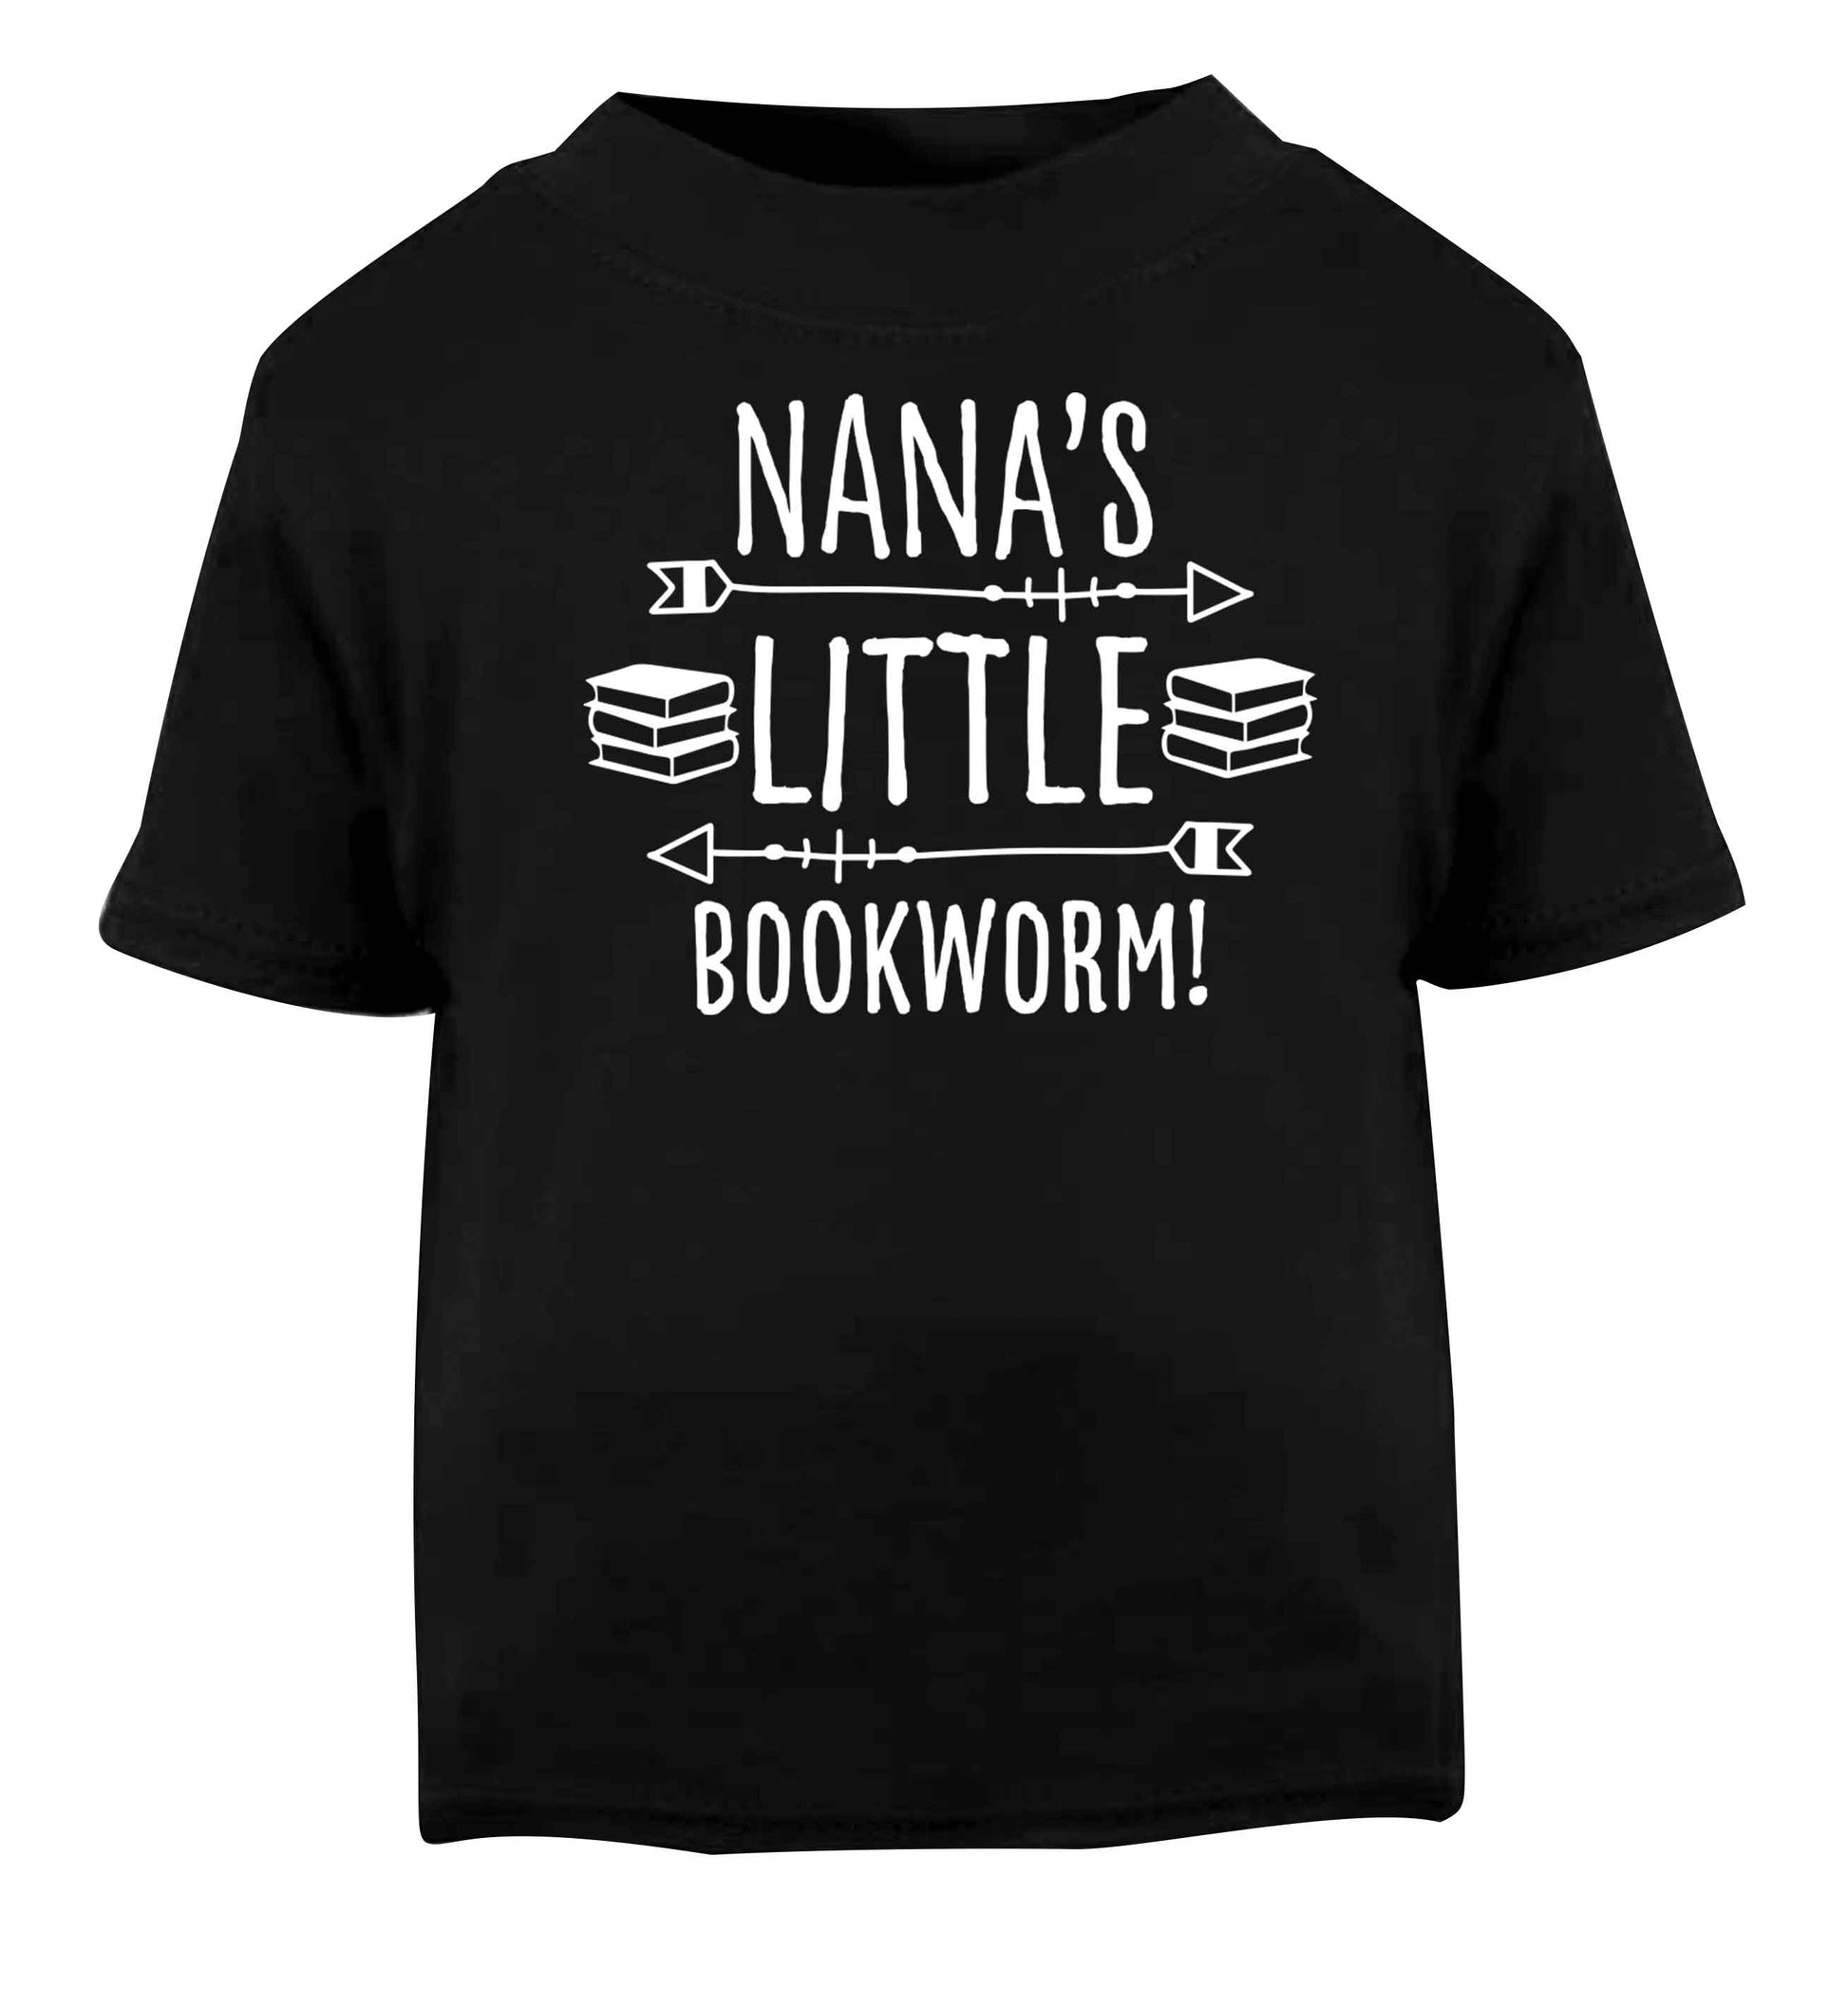 Nana's little bookworm Black baby toddler Tshirt 2 years